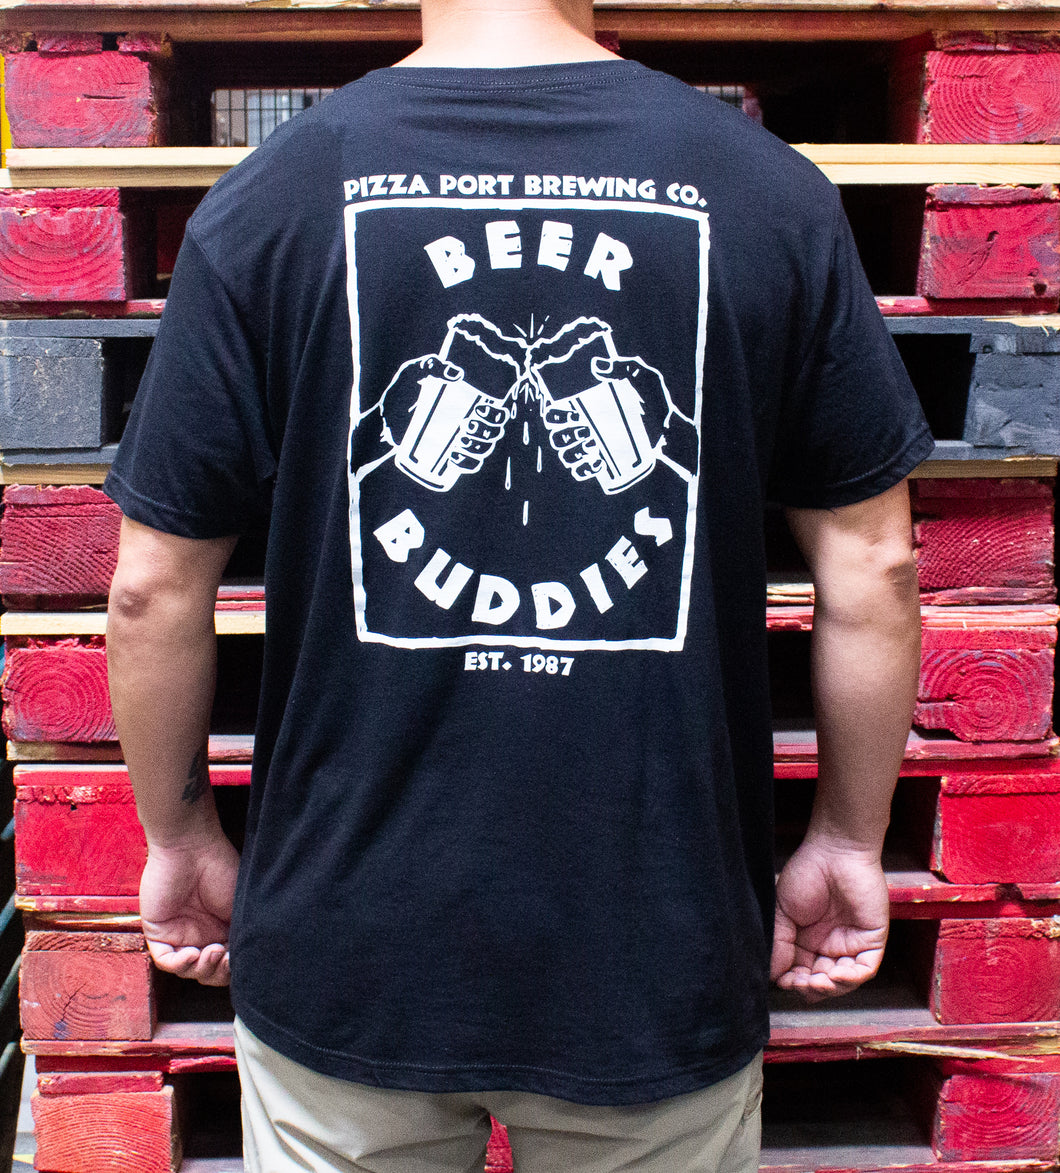 Beer Buddies T-Shirt